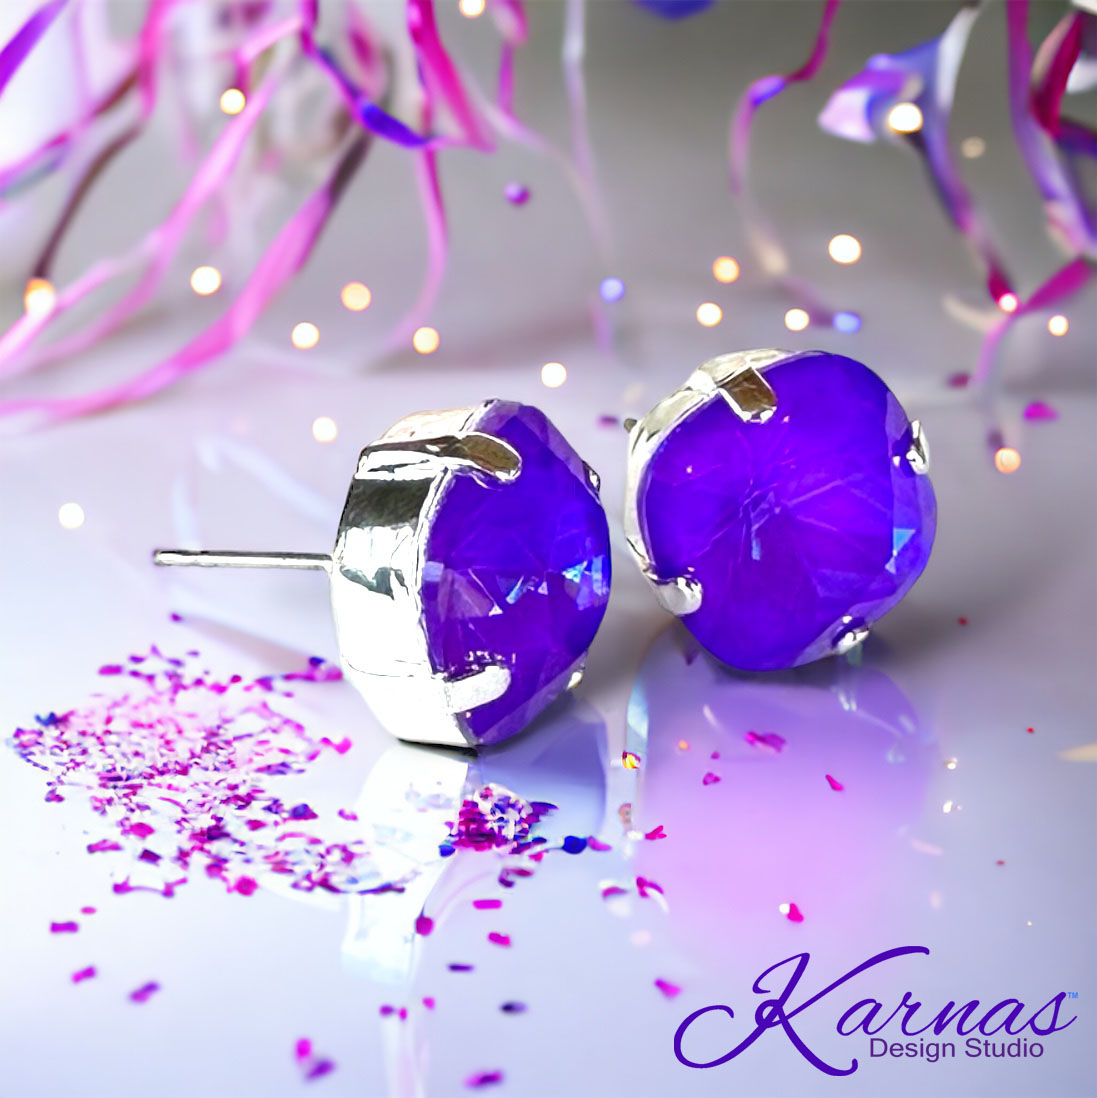 The brightest purple we've ever carried! 

#karnasdesignstudio #kds #jewelry #giftgiving #neon #earrings #jewelrystore #shoppingonline